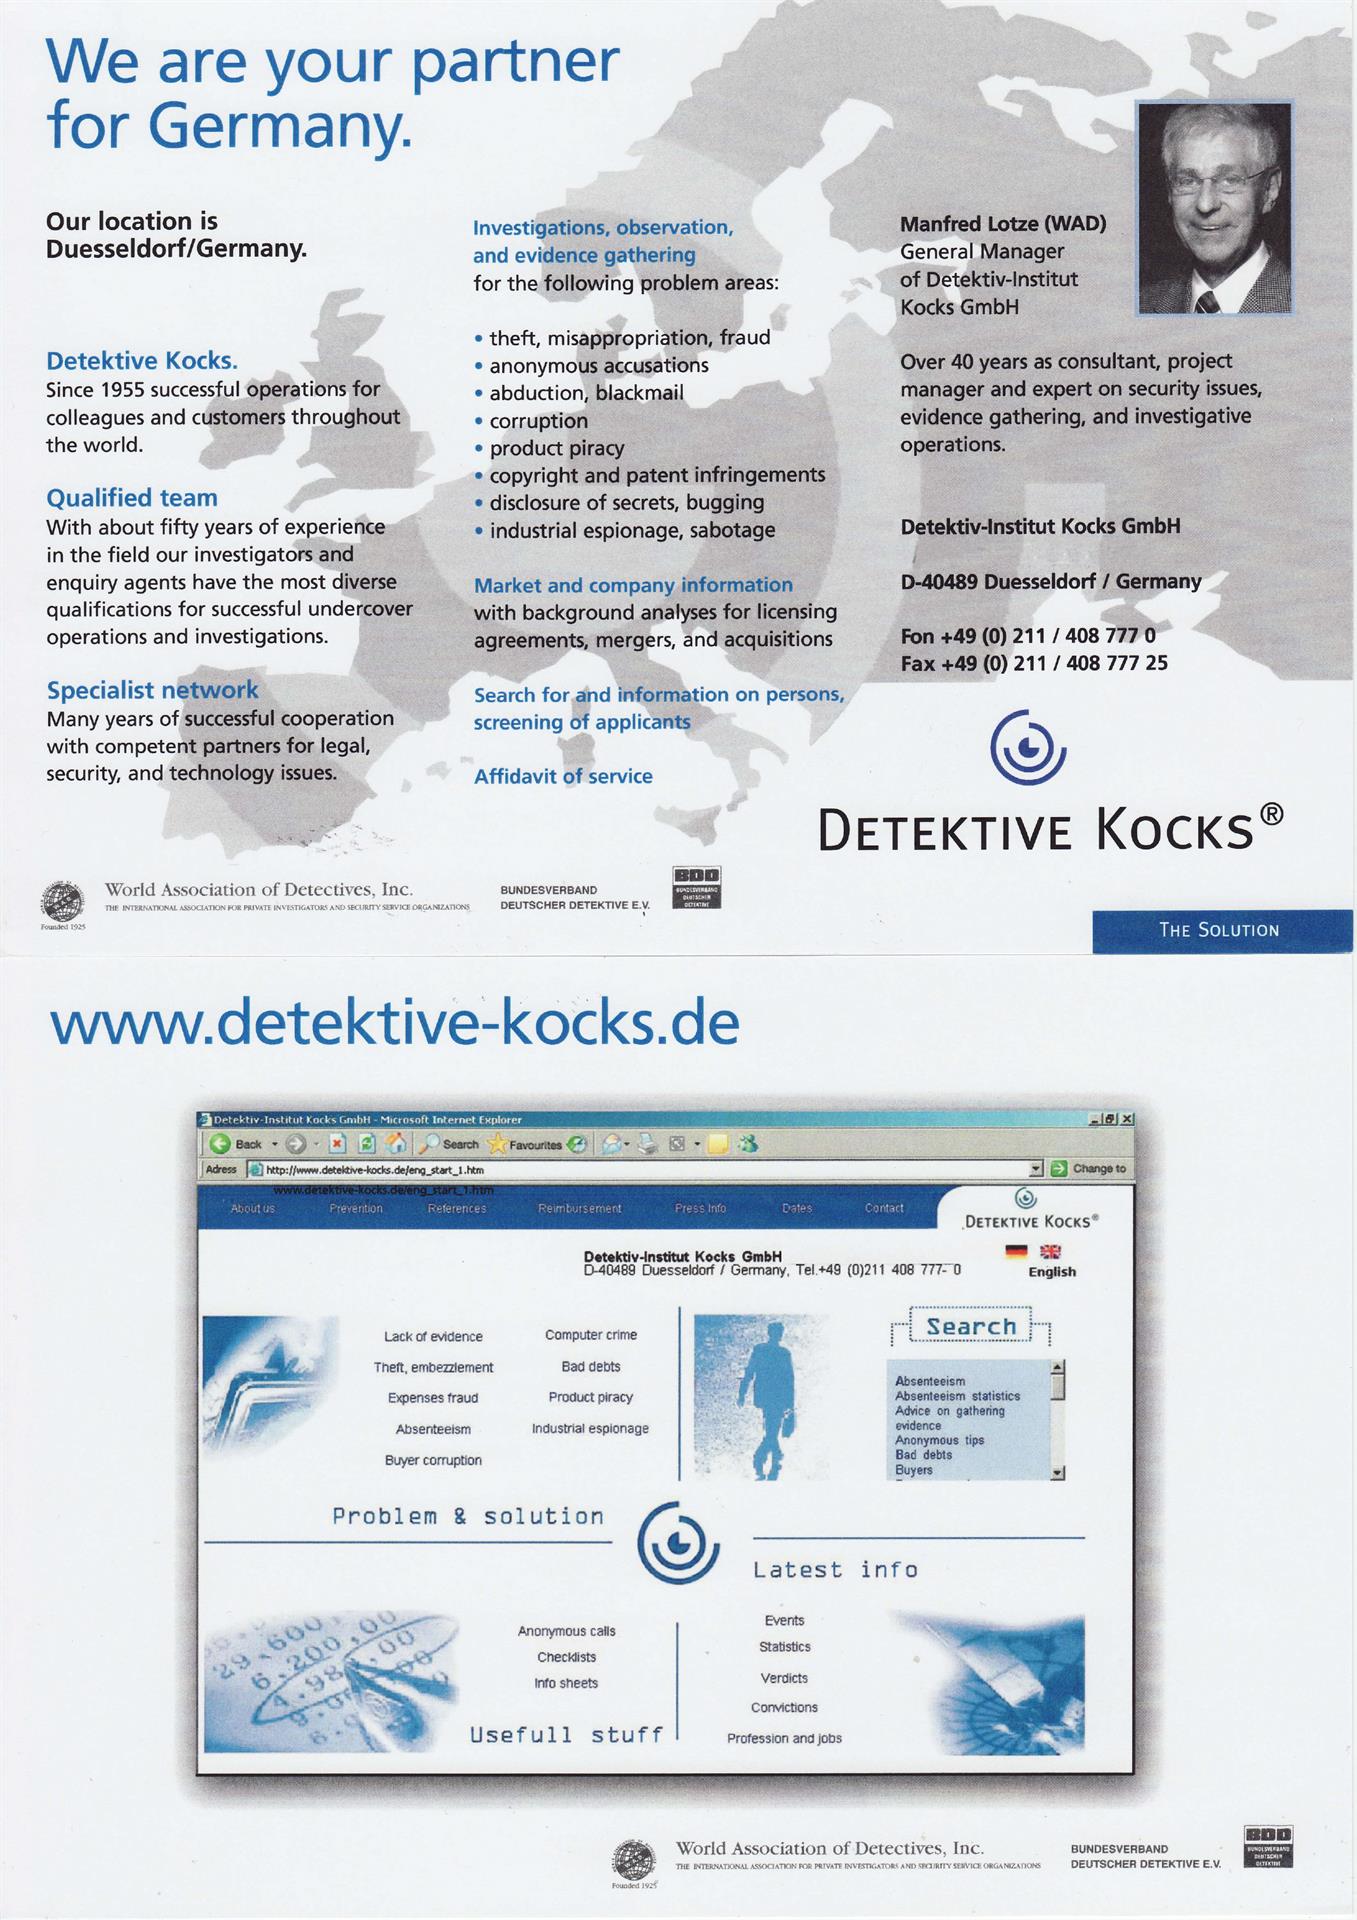 Detektive Kocks Germany